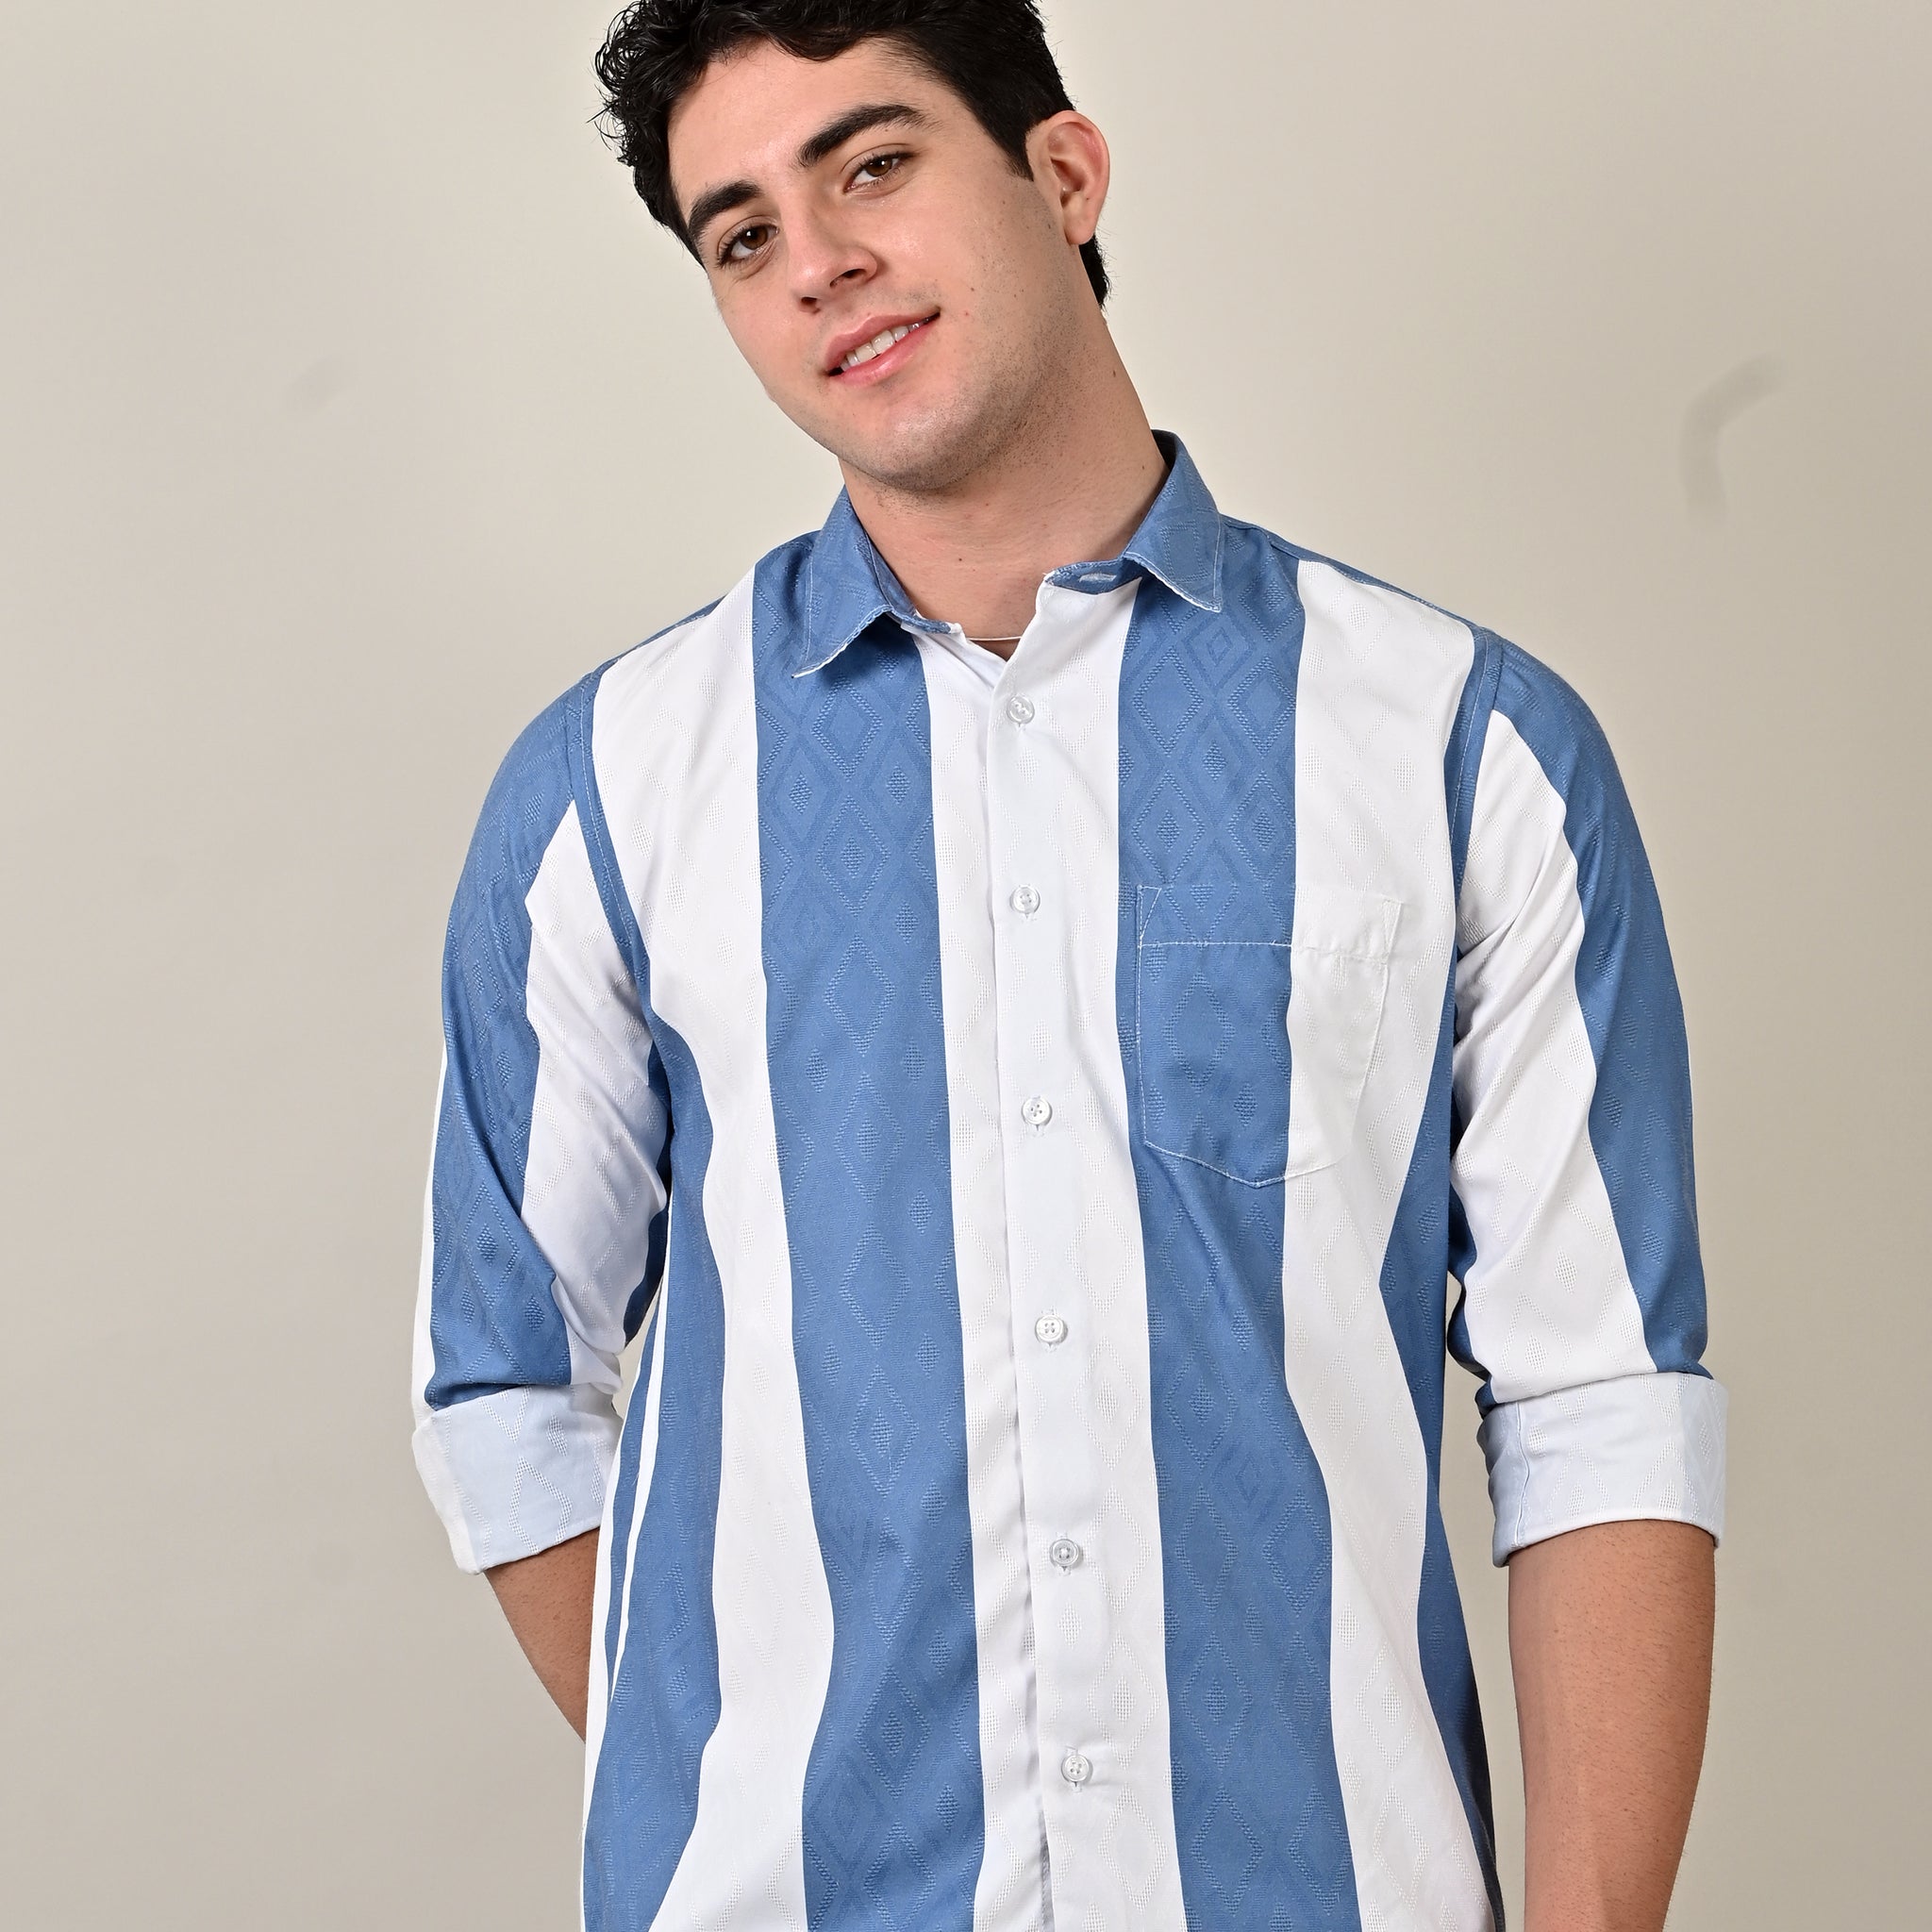 Crochet Printed Blue Stripes Shirt